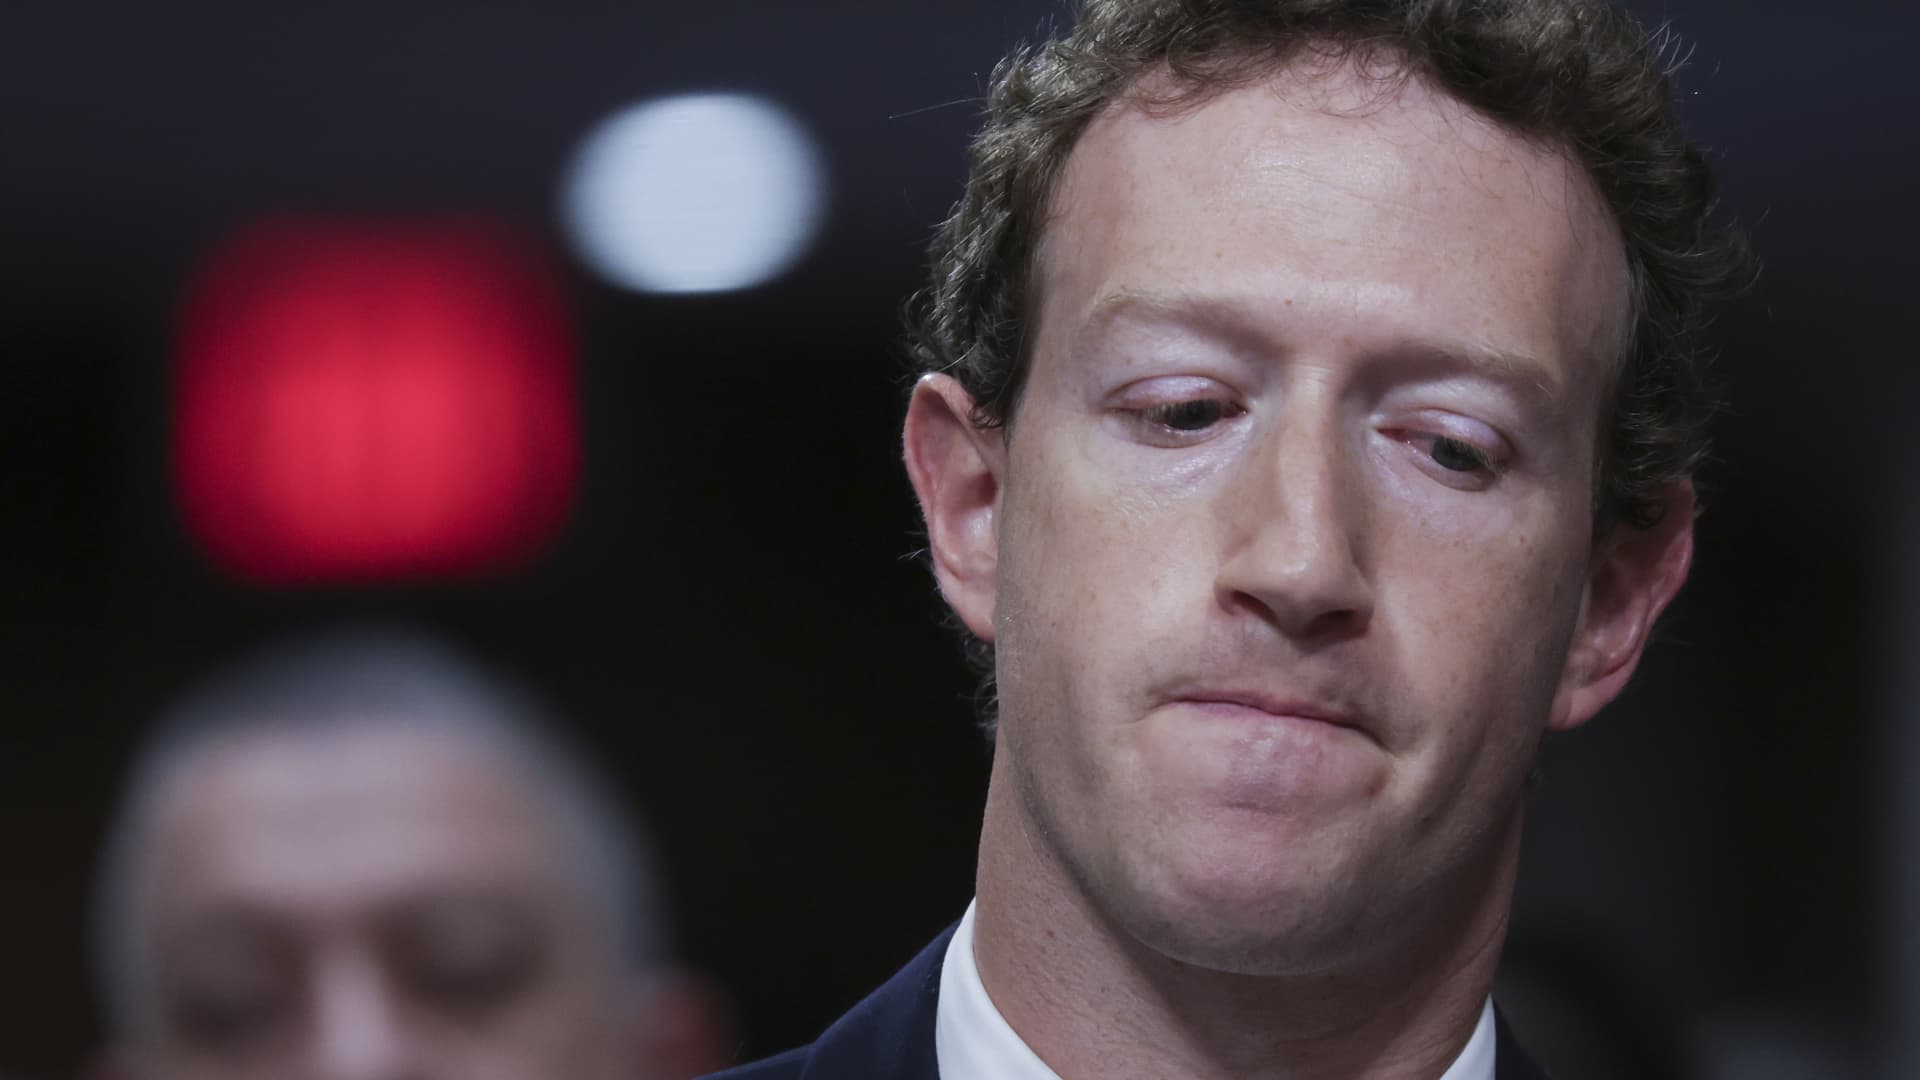 Meta loses 0 billion in worth, Zuckerberg focuses on AI, metaverse